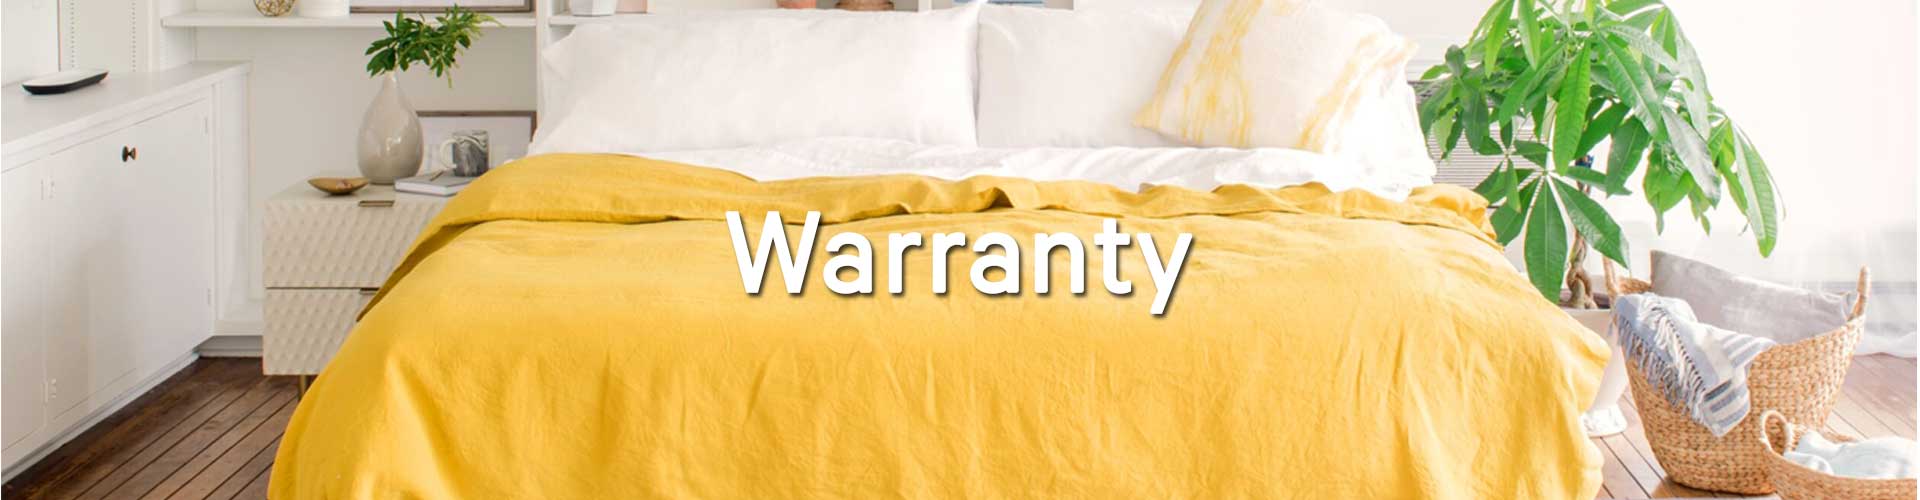 Buy mattress with 11 years warranty - springtek